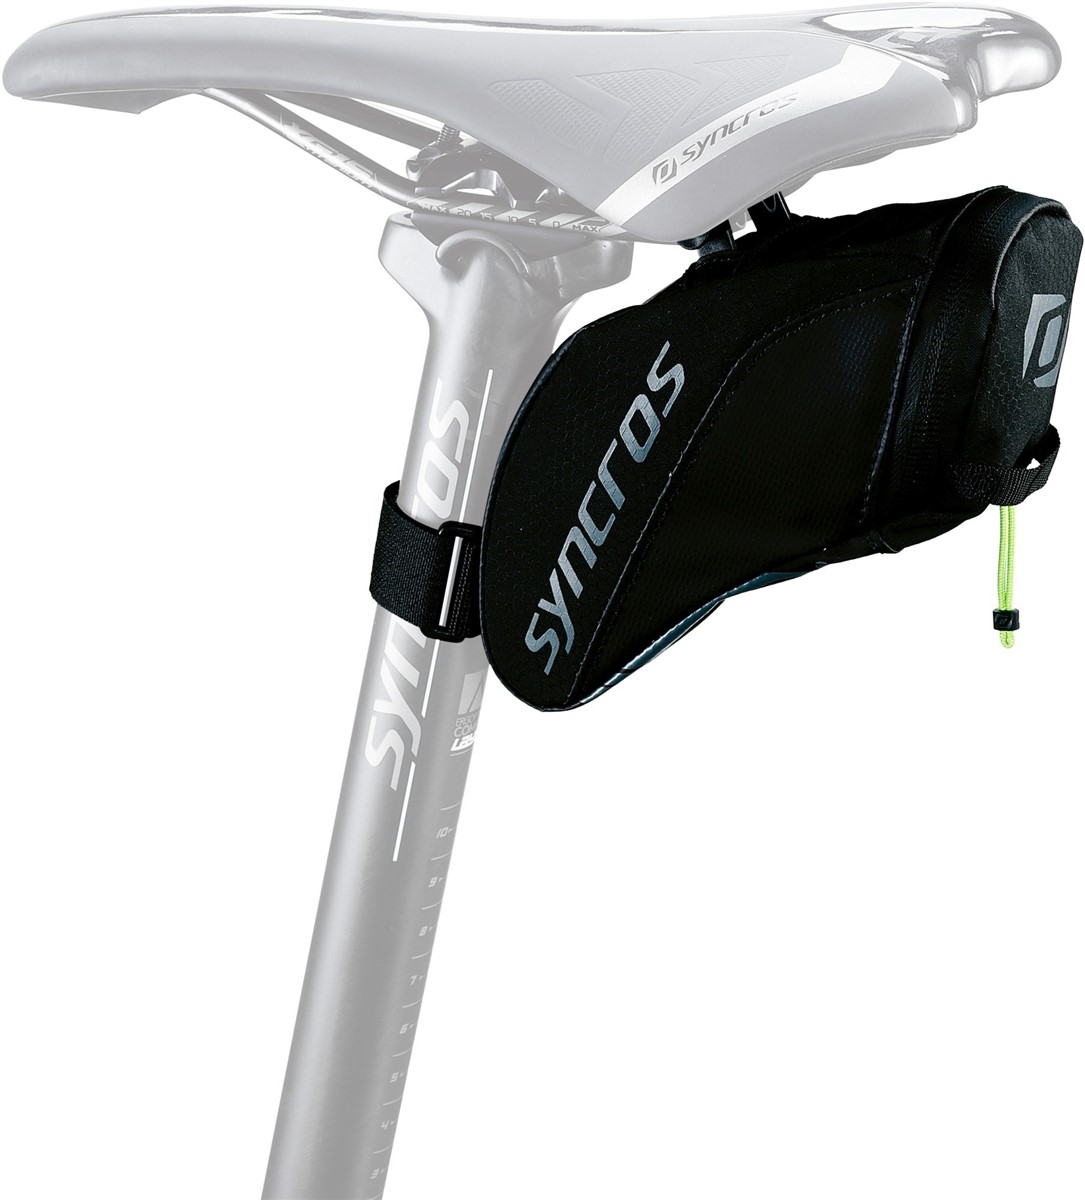 Syncros Speed 350 Saddle Bag product image